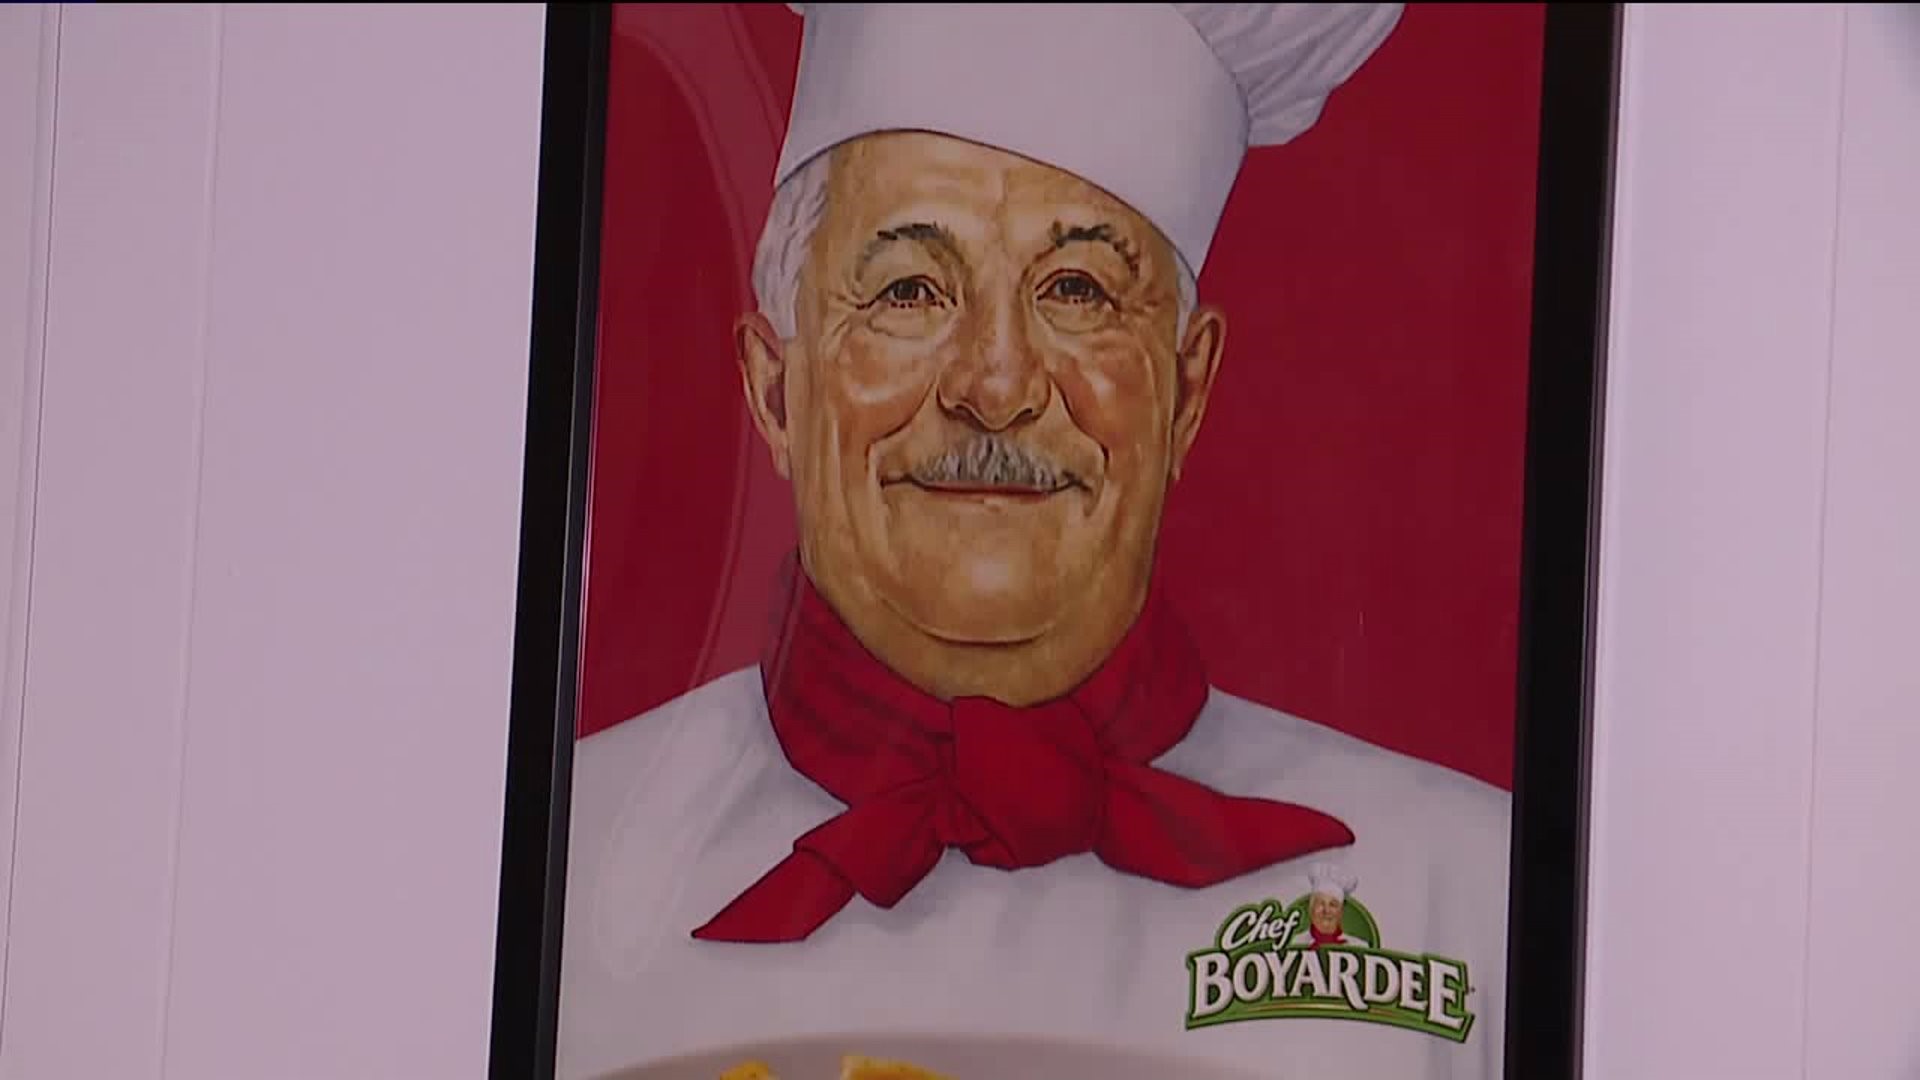 On The Pennsylvania Road: Chef Boyardee